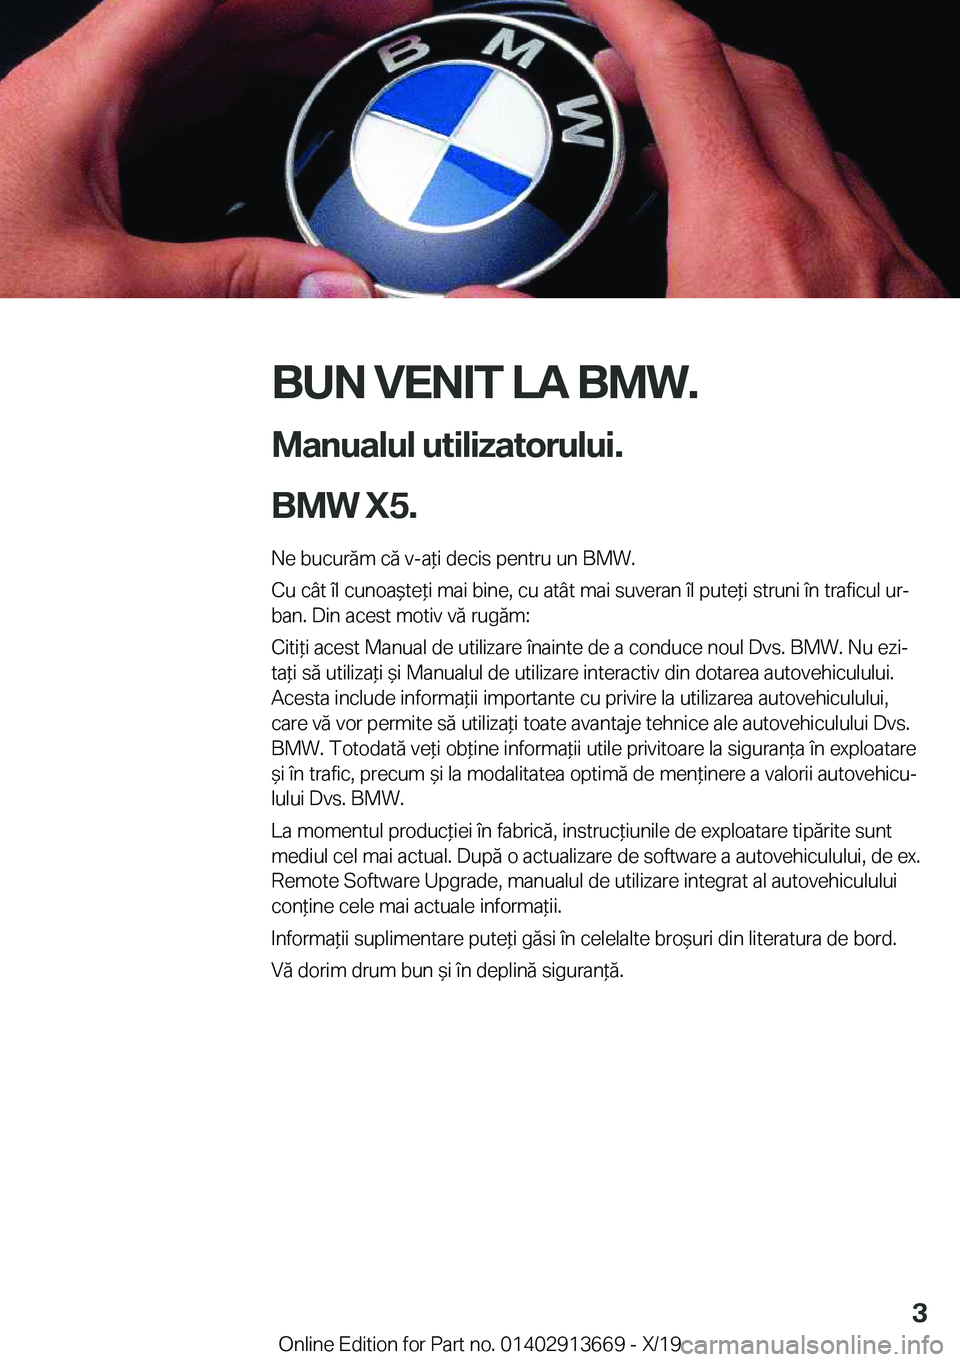 BMW X5 2020  Ghiduri De Utilizare (in Romanian) �B�U�N��V�E�N�I�T��L�A��B�M�W�.�M�a�n�u�a�l�u�l��u�t�i�l�i�z�a�t�o�r�u�l�u�i�.
�B�M�W��X�5�. �N�e��b�u�c�u�r�ă�m��c�ă��v�-�a*�i��d�e�c�i�s��p�e�n�t�r�u��u�n��B�M�W�.
�C�u��c�